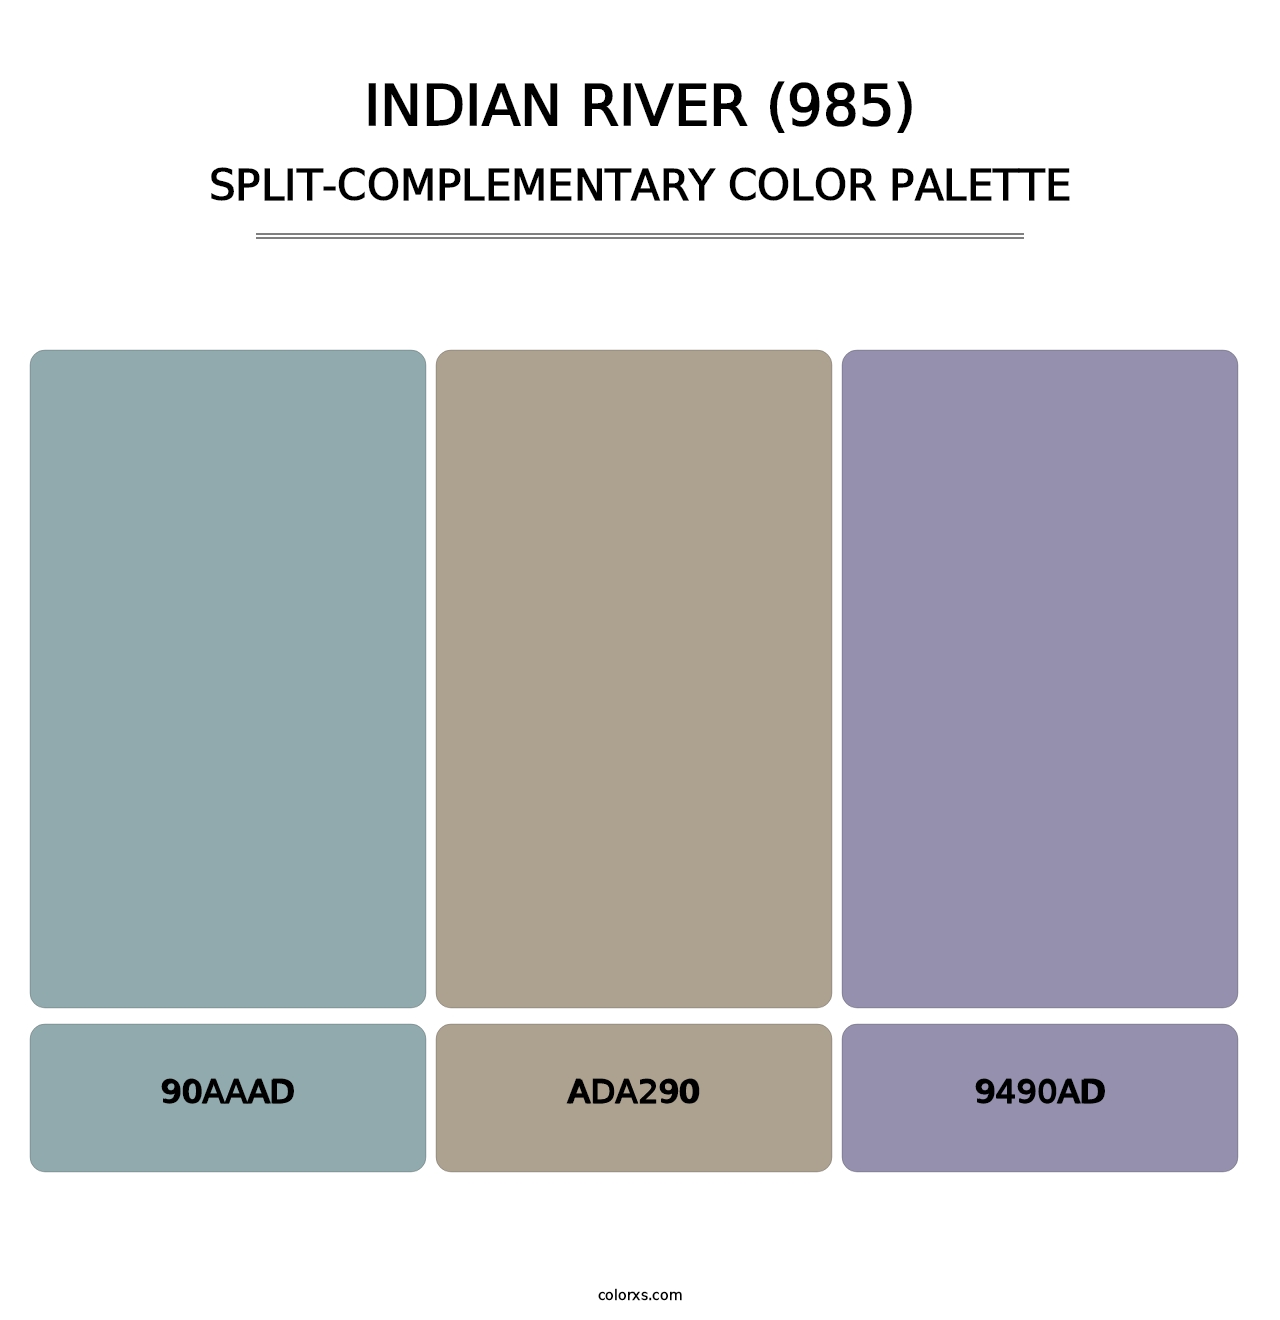 Indian River (985) - Split-Complementary Color Palette